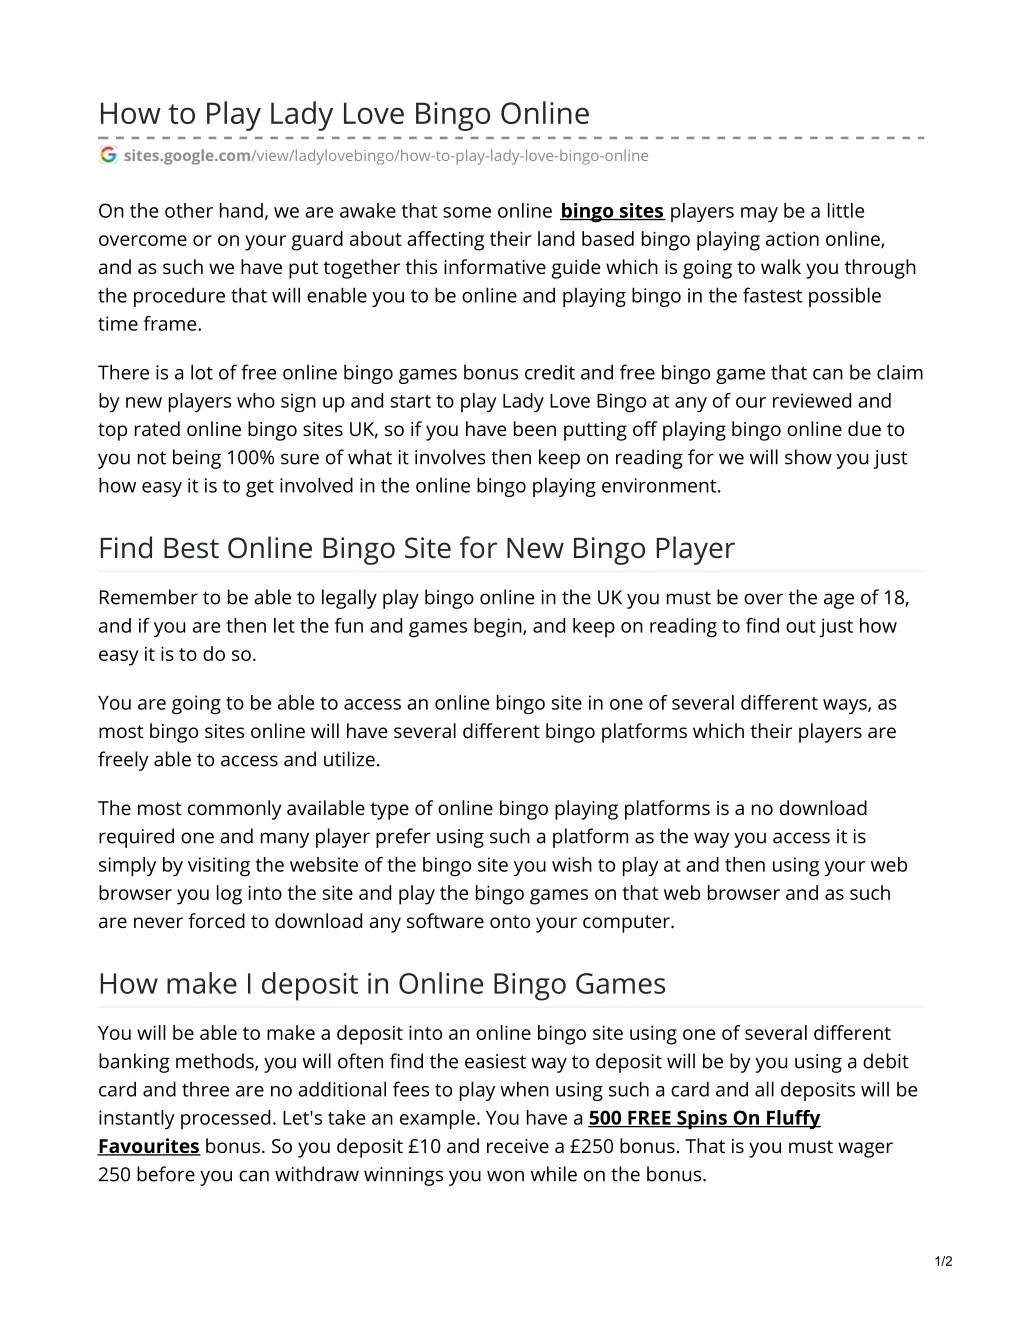 how to play lady love bingo online